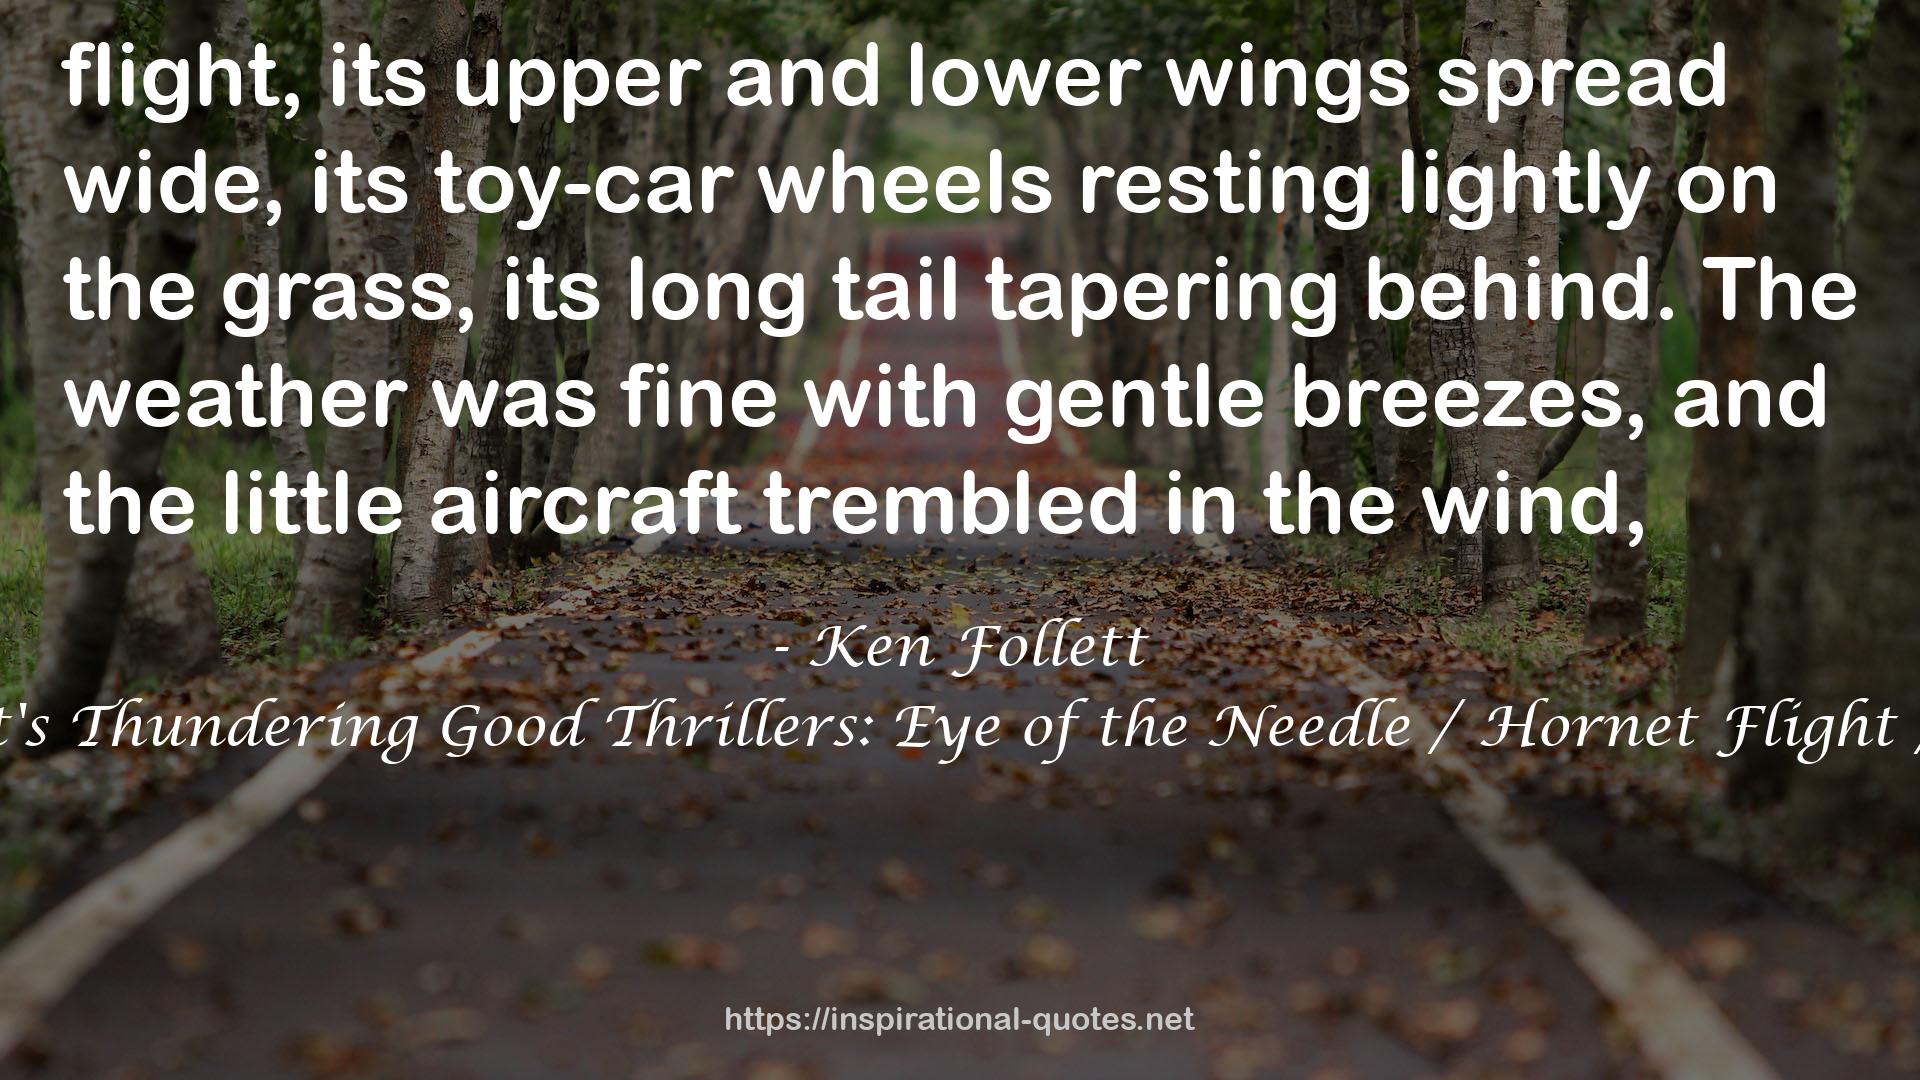 Ken Follett's Thundering Good Thrillers: Eye of the Needle / Hornet Flight / Jackdaws QUOTES